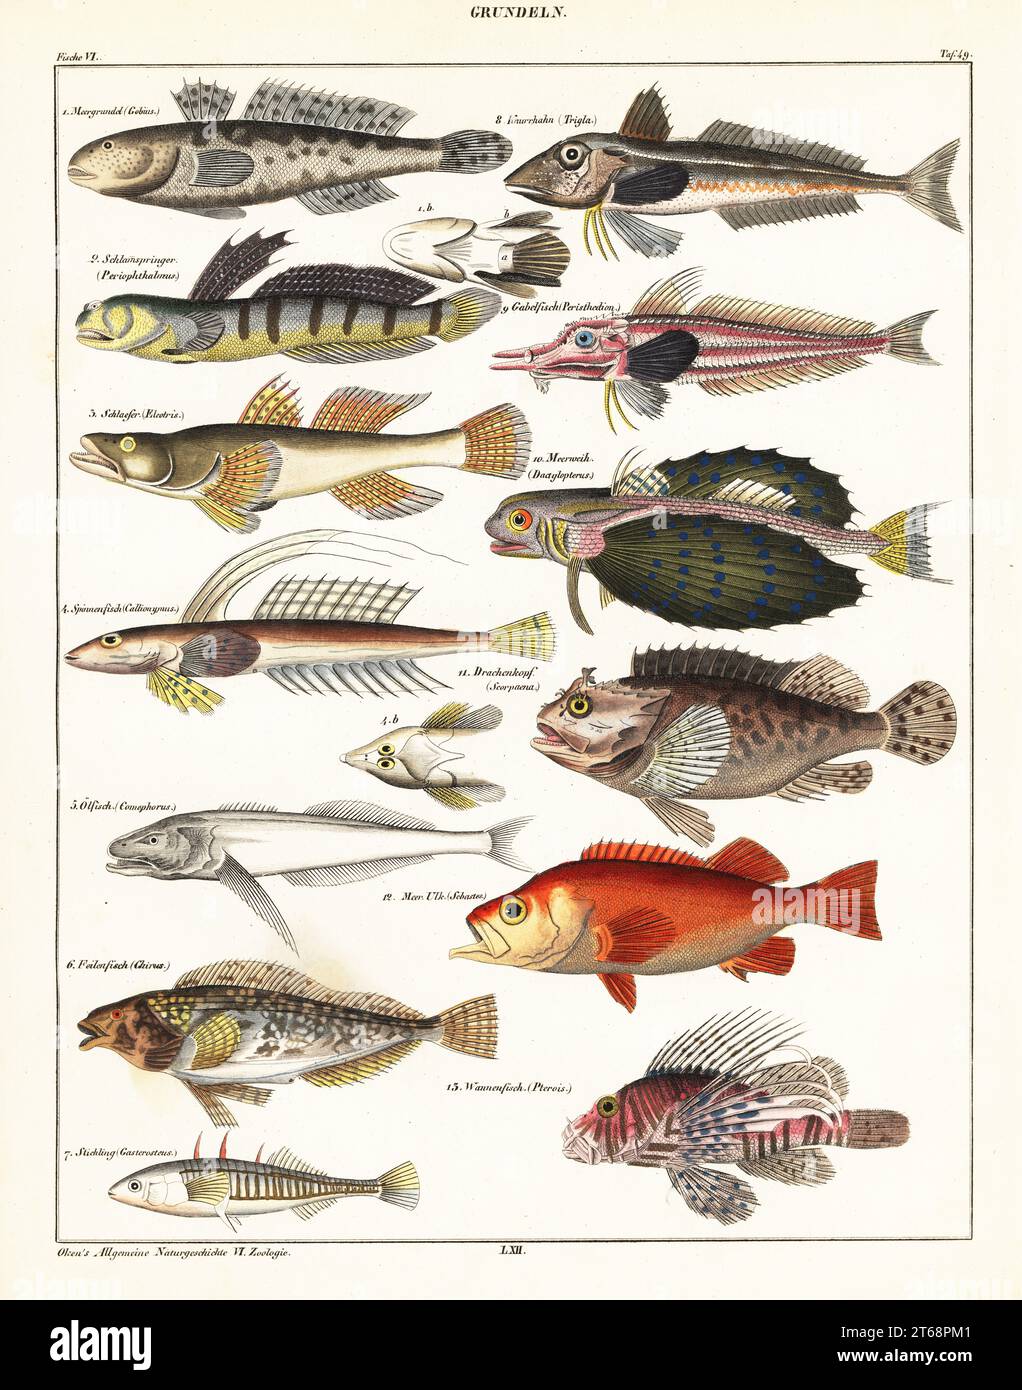 Fish species. Plate 49: Grundeln. 1 goby, Gobius, Meergrundel, 2 mudskipper, Periophthalmus, Schlammspringer, 3 dusky sleeper, Eleotris fusca, Schlaefer, 4 dragonet, Callionymus, Spinnenfisch, 5 Baikal oilfish, Comephorus baikalensis, Olfisch, 6 greenling, Hexagrammos, Feilenfiscch (Chirus), 7 three-spined stickleback, Gasterosteus aculeatus, Stichling, 8. piper gurnard, Trigla lyra, Knurrhahn, 9 armored searobin, Peristedion, Gabelfisch, 10 flying gurnard, Dactylopterus volitans, Meerweih, 11 scorpion fish, Scorpaena porcus, Drachenkopf, 12 rose fish, Sebastes norvegicus, Meer Ulk, and 13 spo Stock Photo